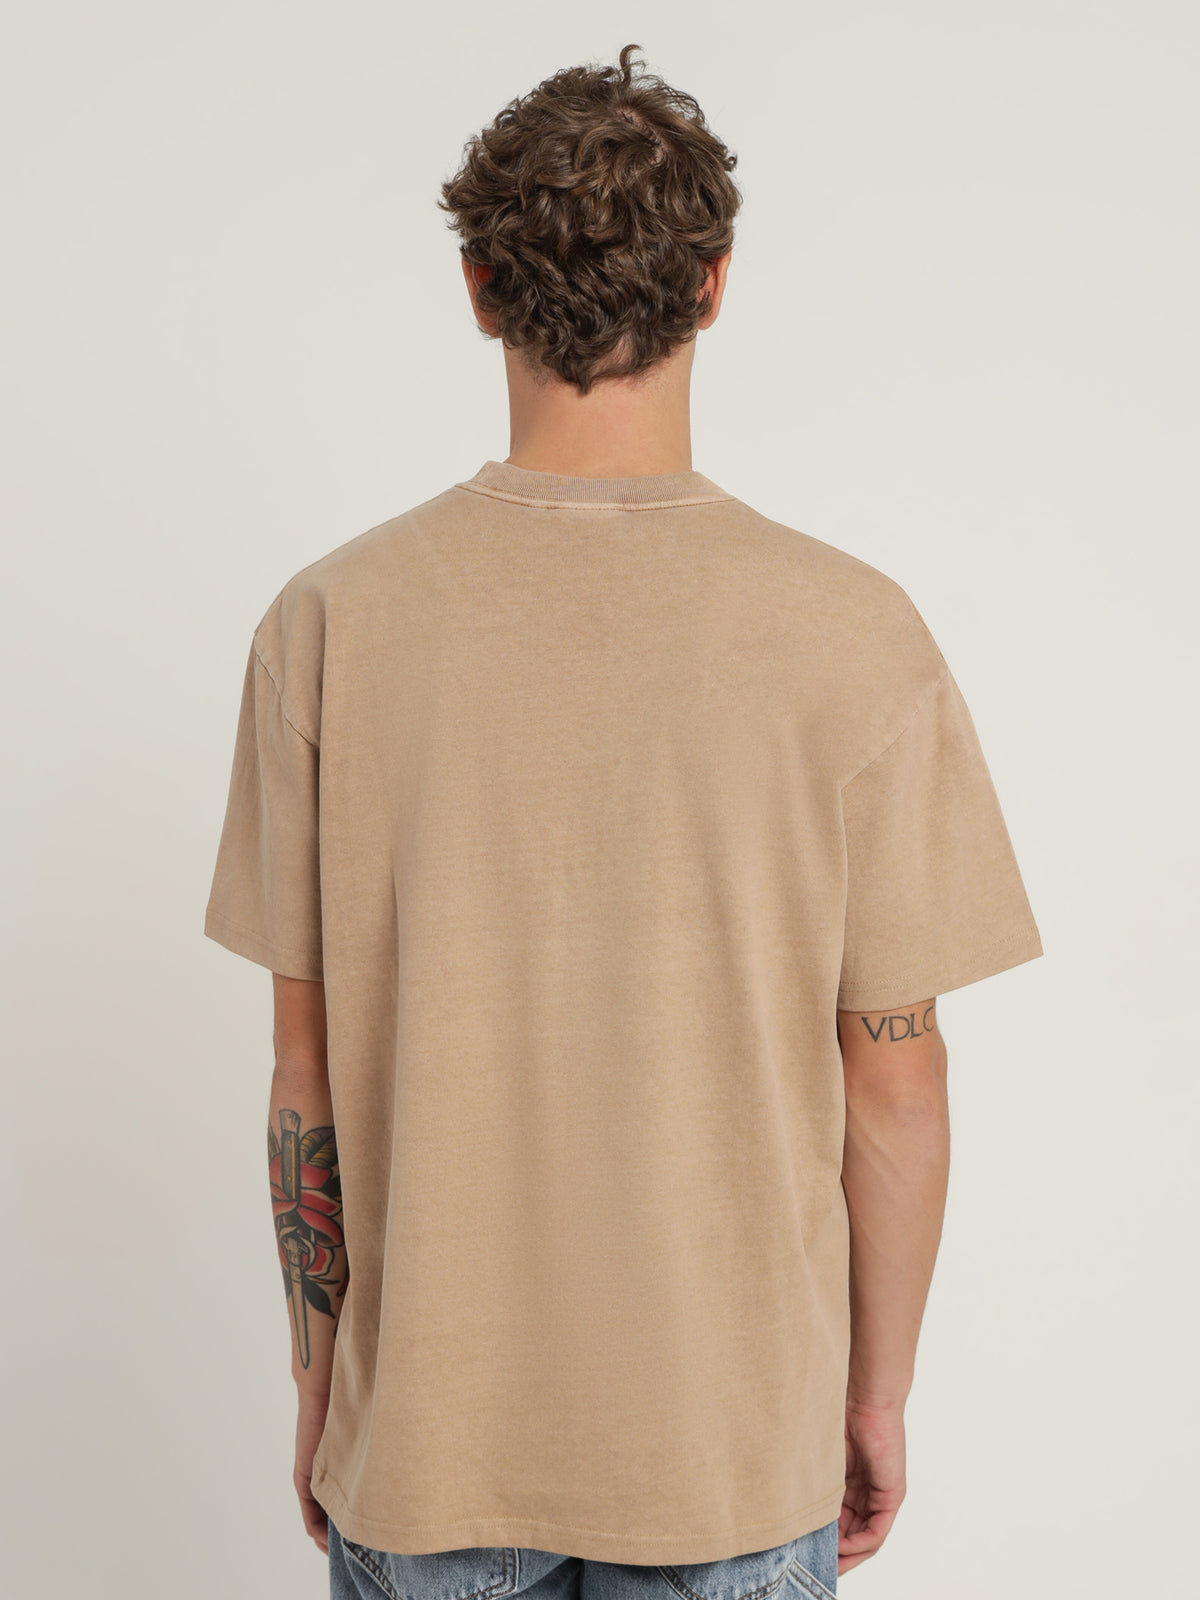 Duster T-Shirt in Tan